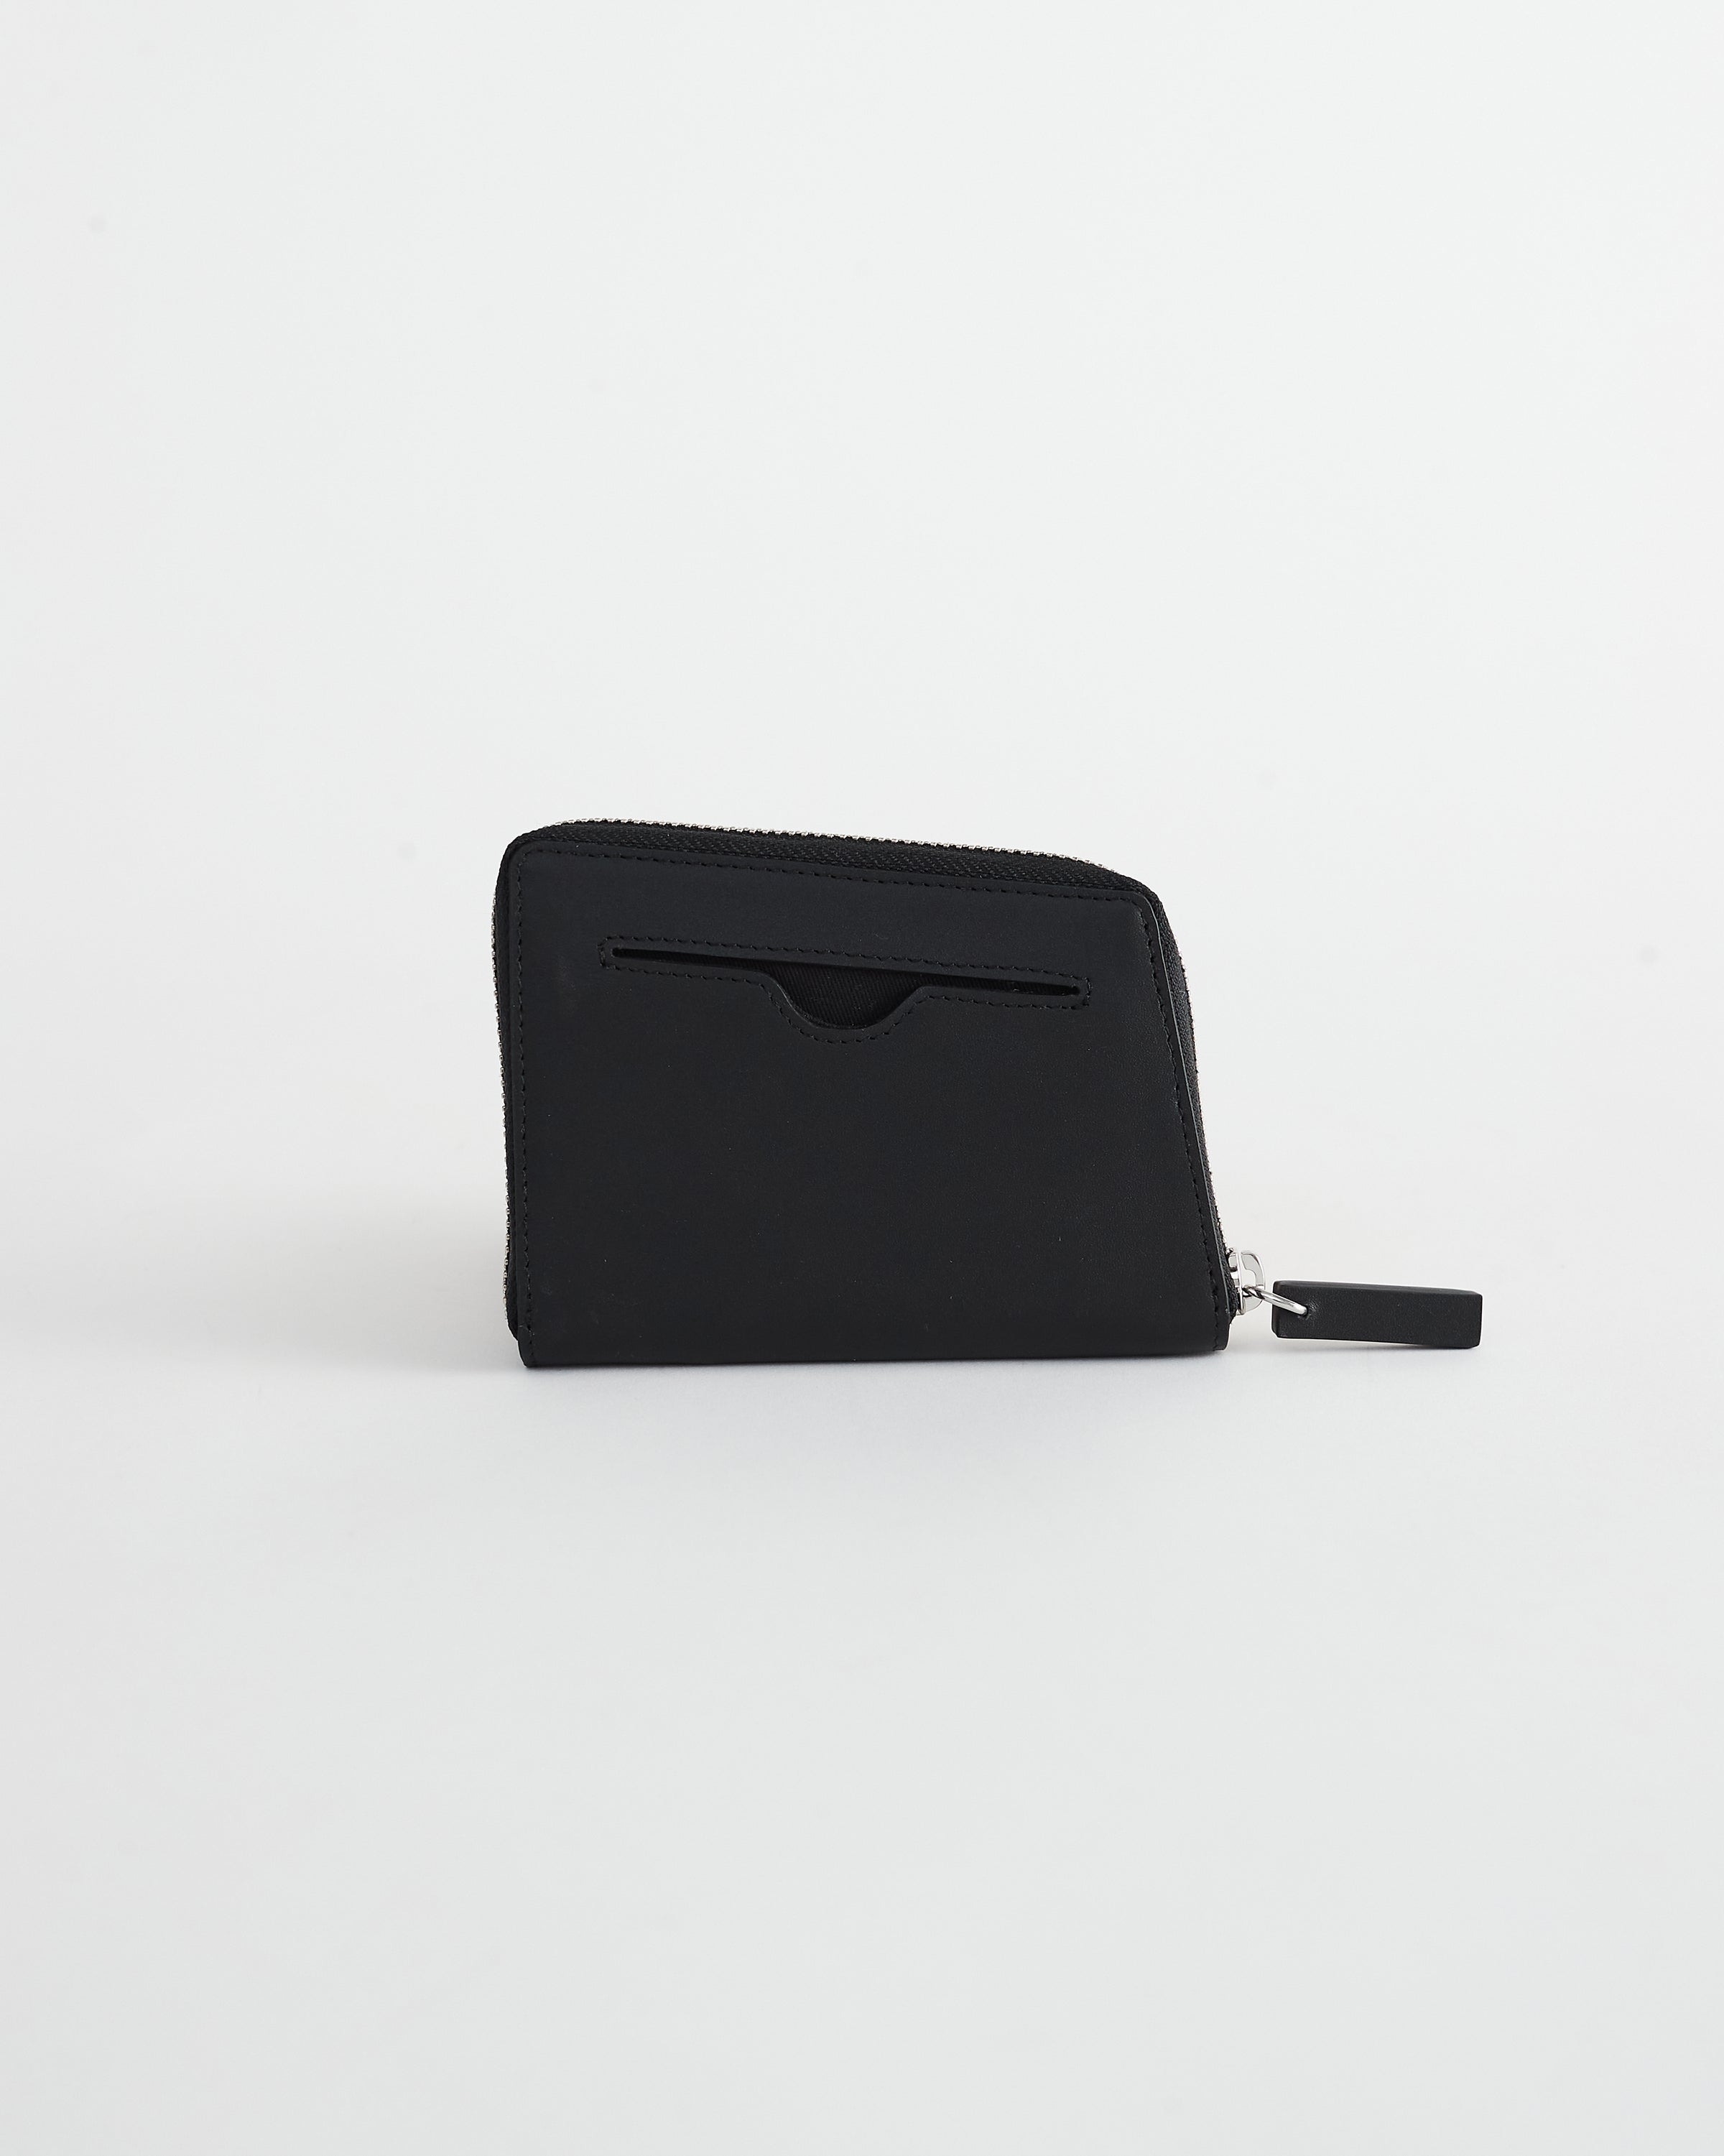 Bo Compact Wallet: Black